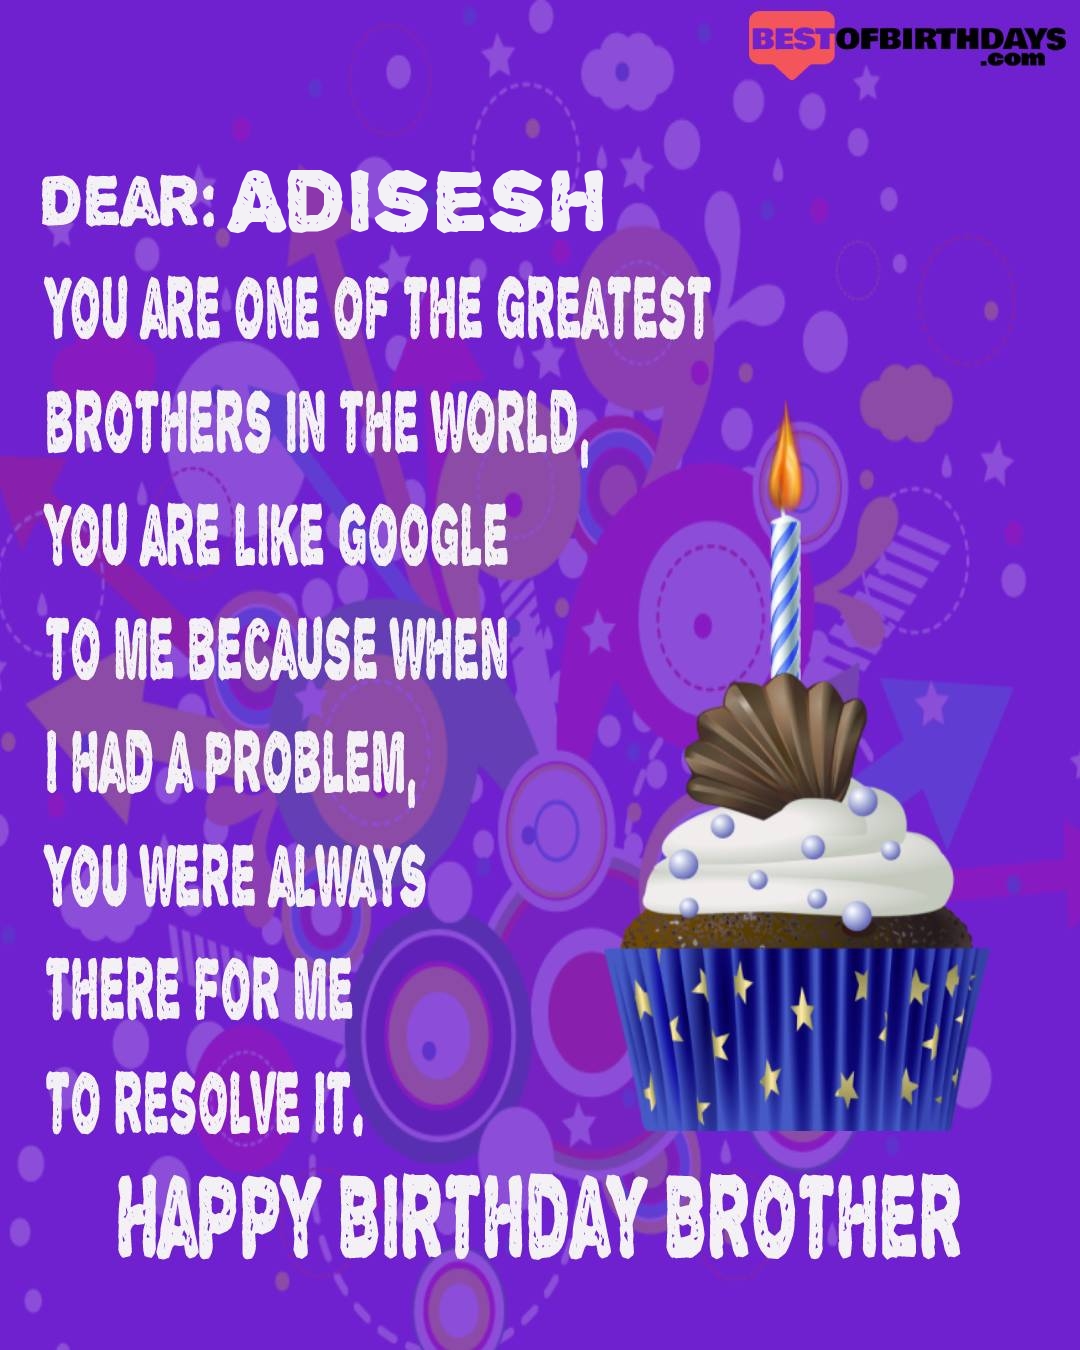 Happy birthday adisesh bhai brother bro